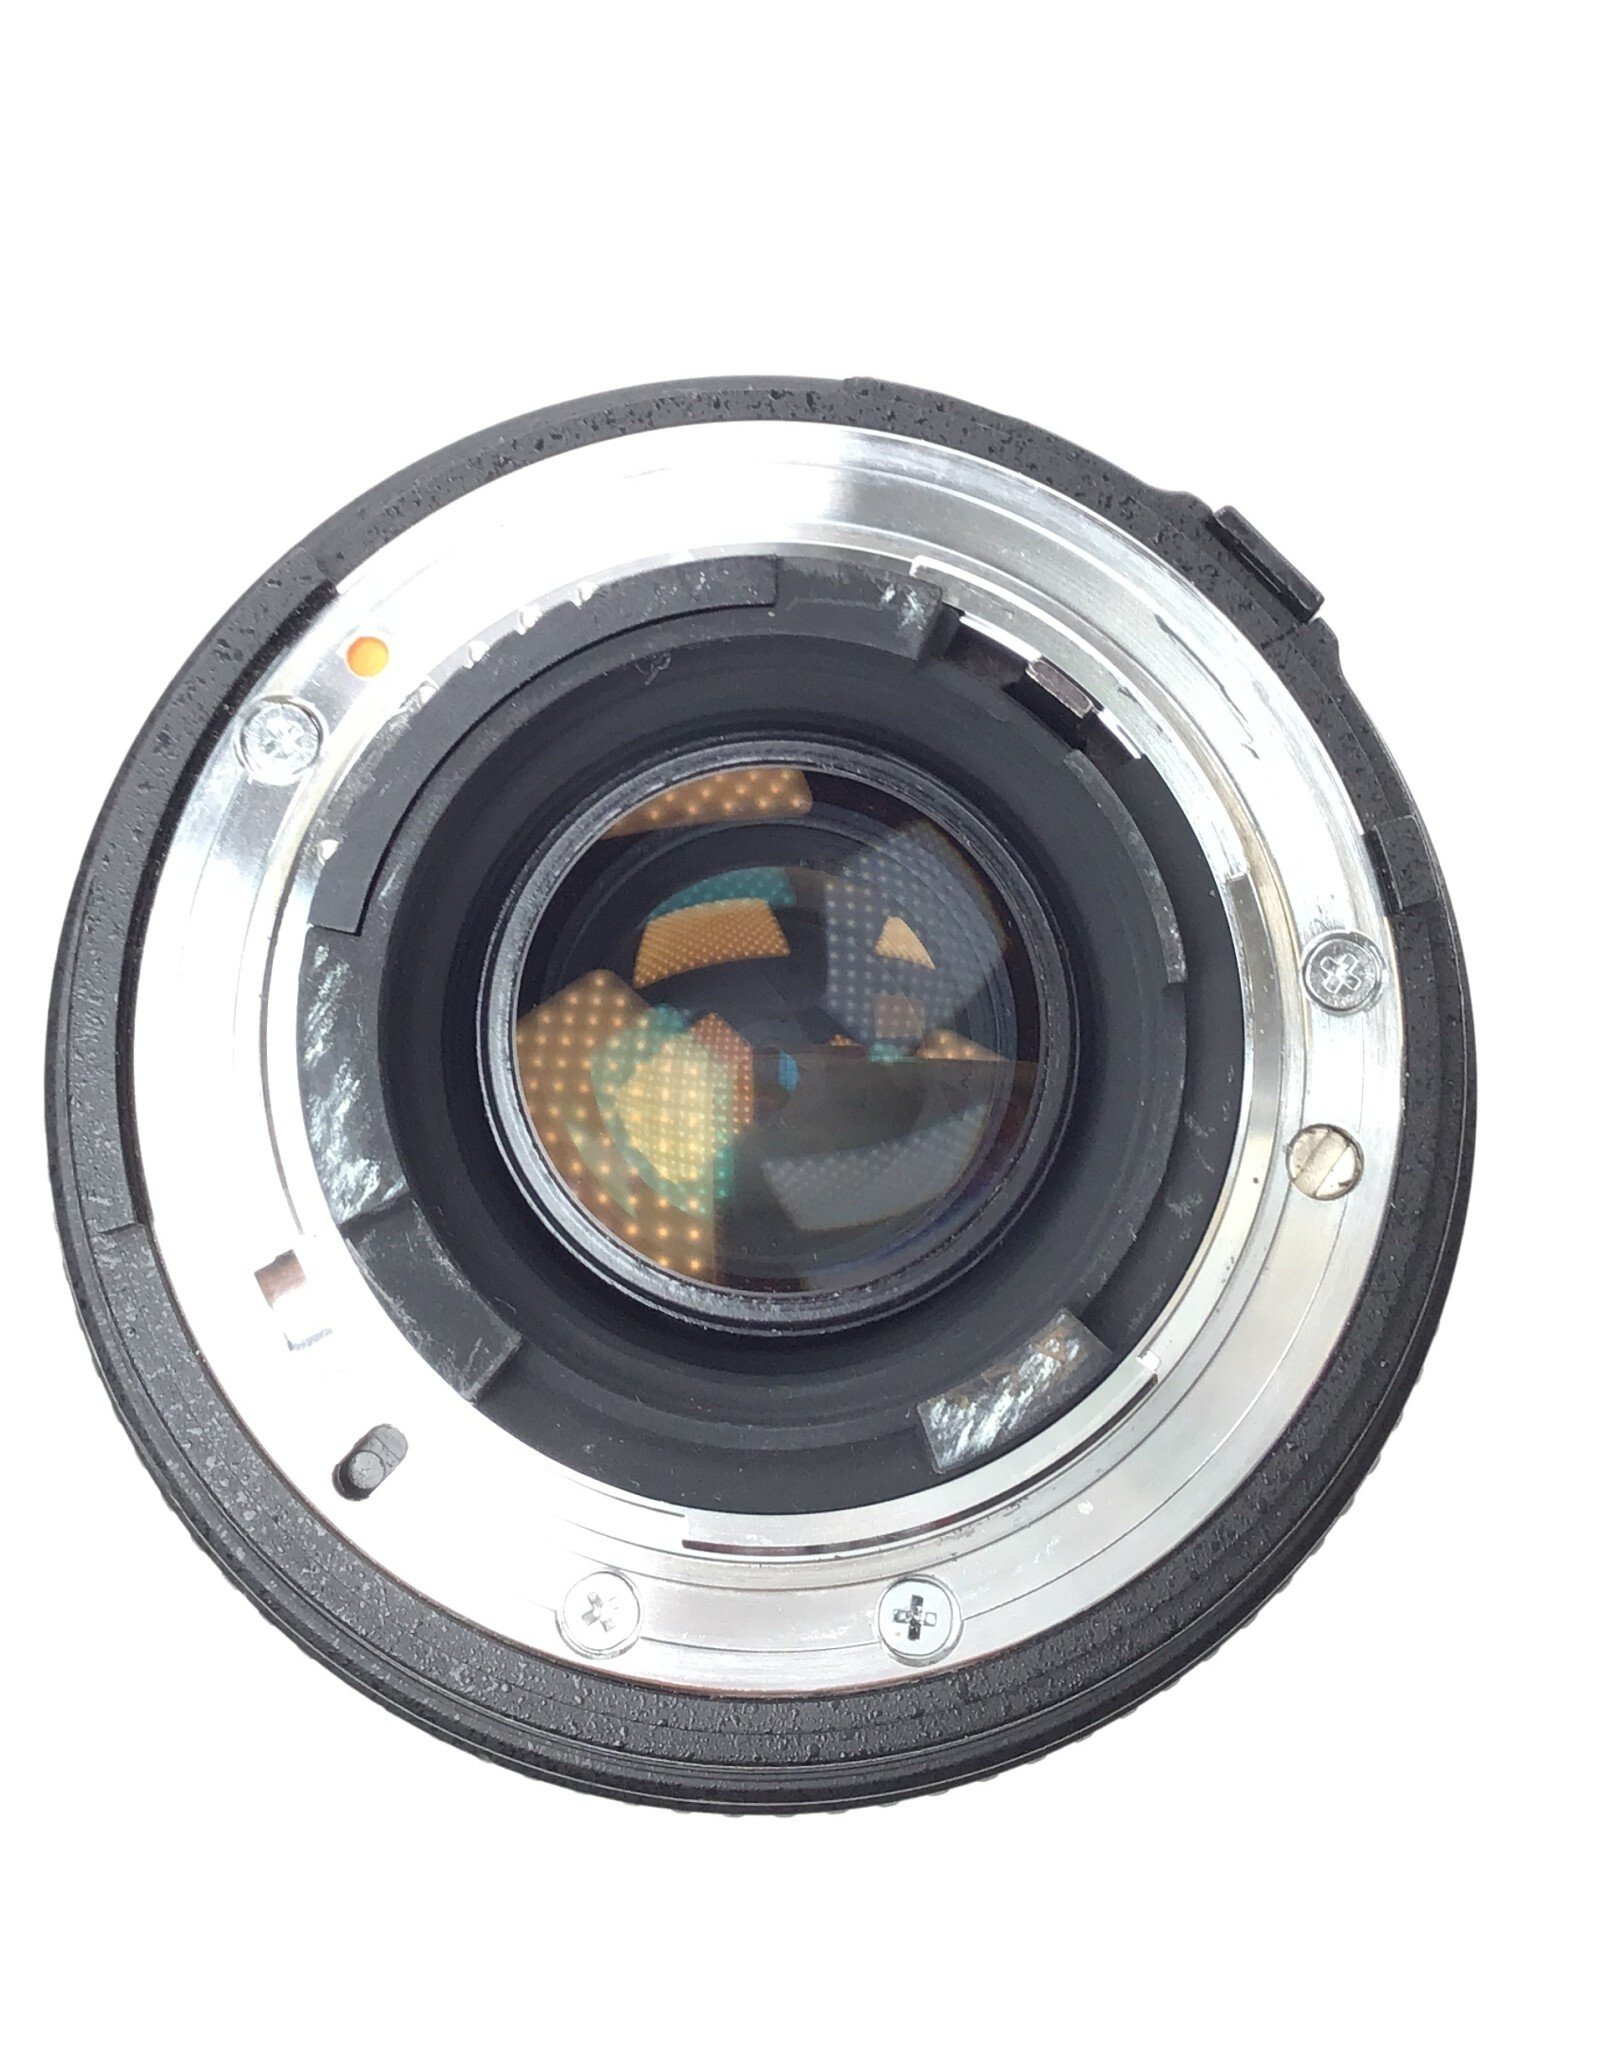 SIGMA Sigma 70-300mm D f4-5.6 Lens for Nikon Used Good